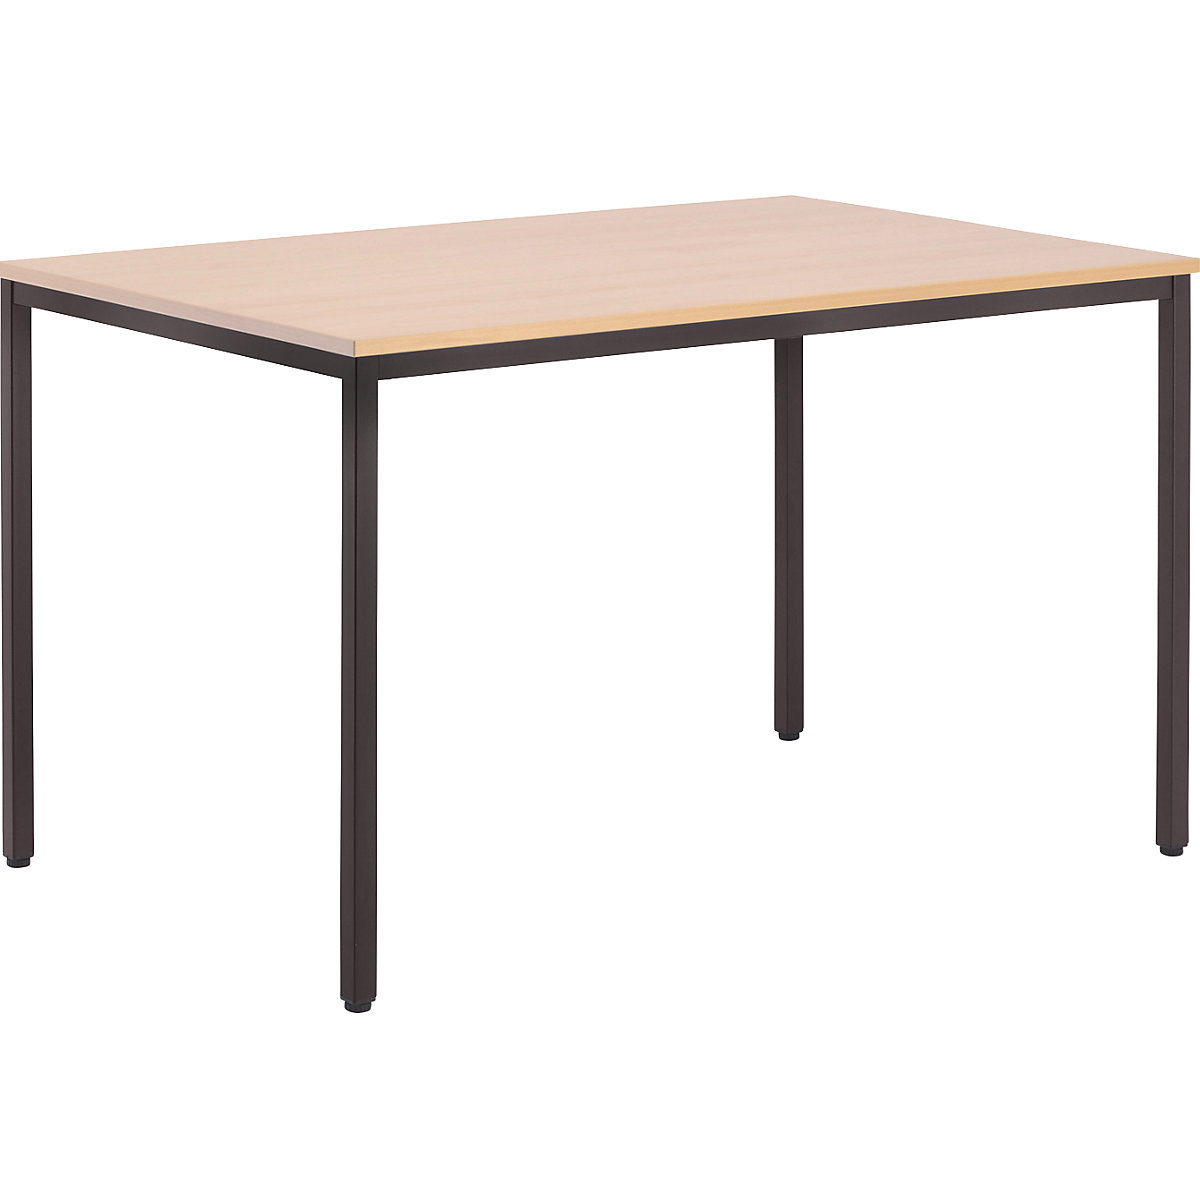 Višenamjenski stol – eurokraft basic, VxŠxD 720 x 1200 x 800 mm, ploča u imitaciji bukve, postolje u sivosmeđoj boji-4